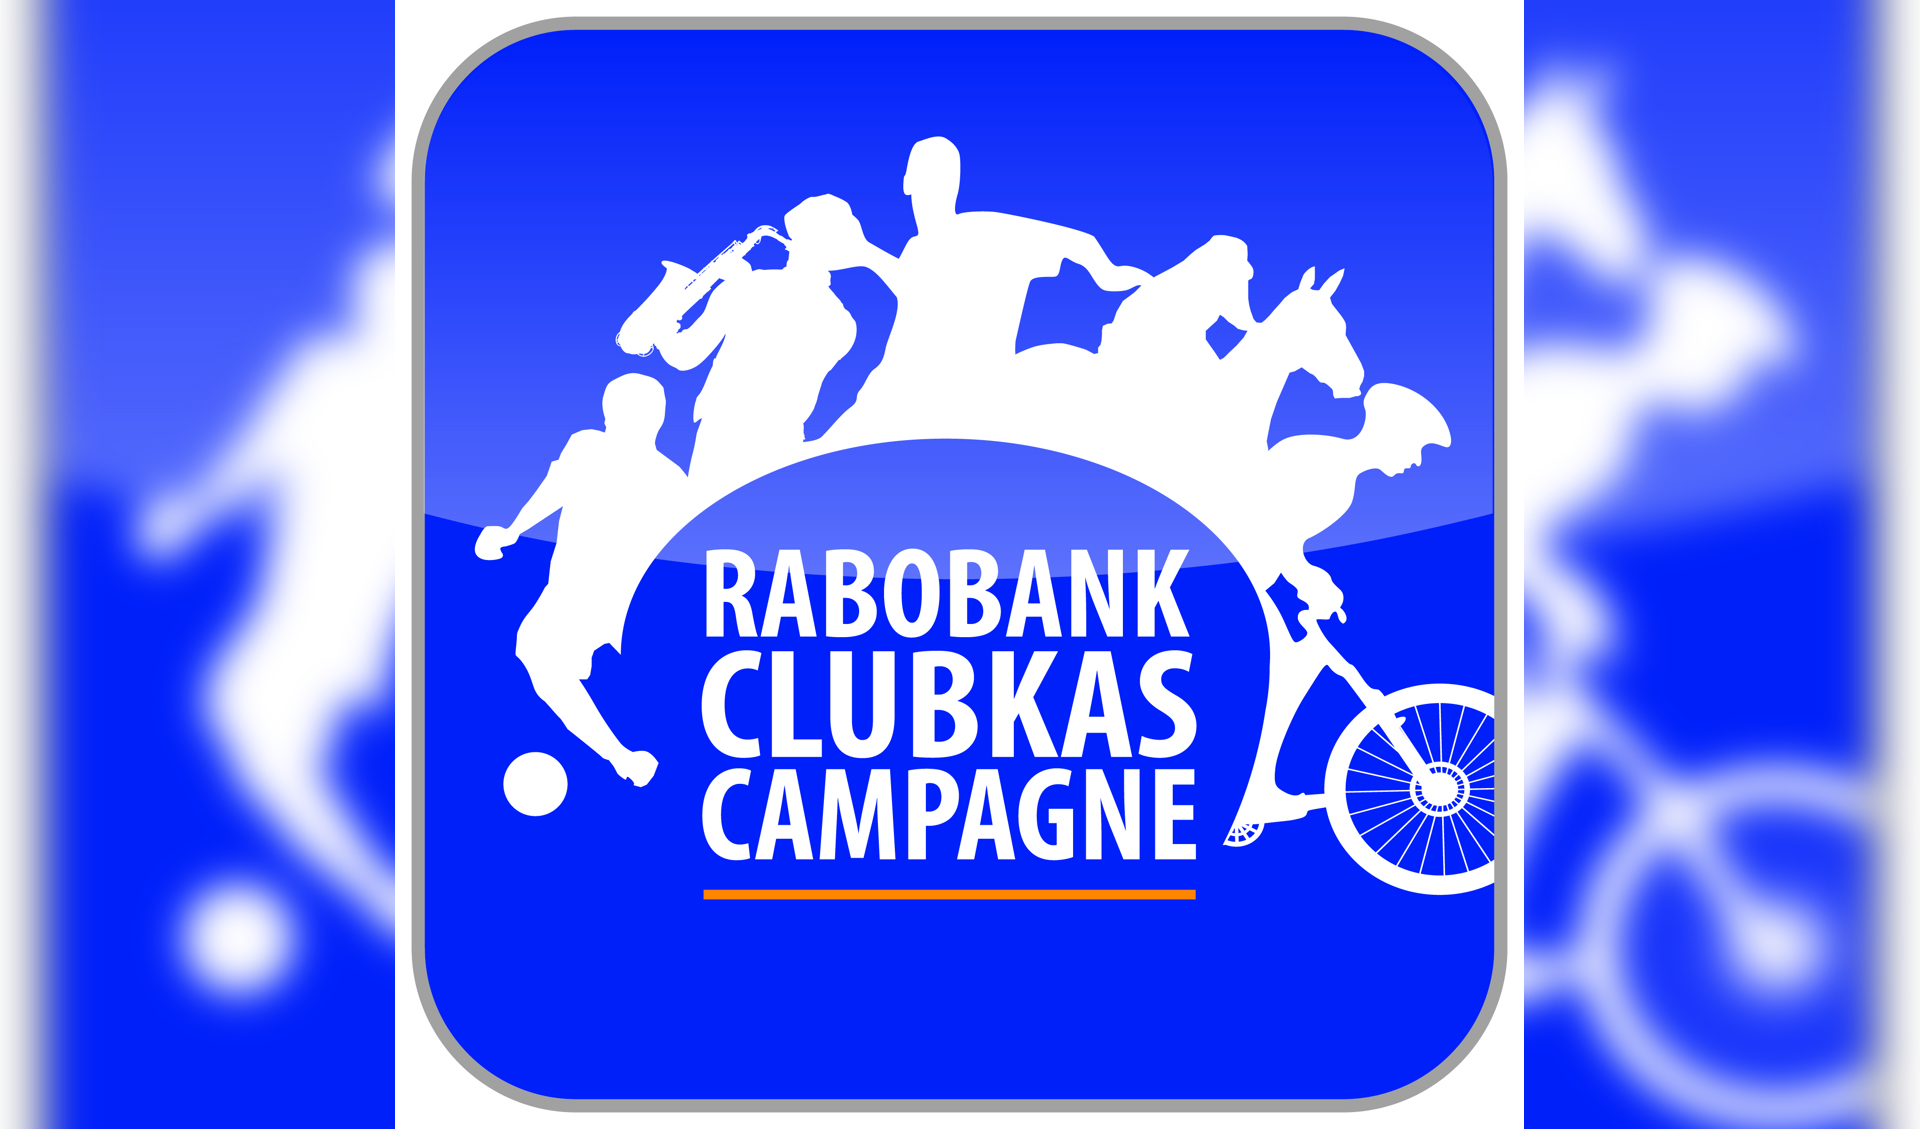 Rabobank Clubkas Campagne 2016.